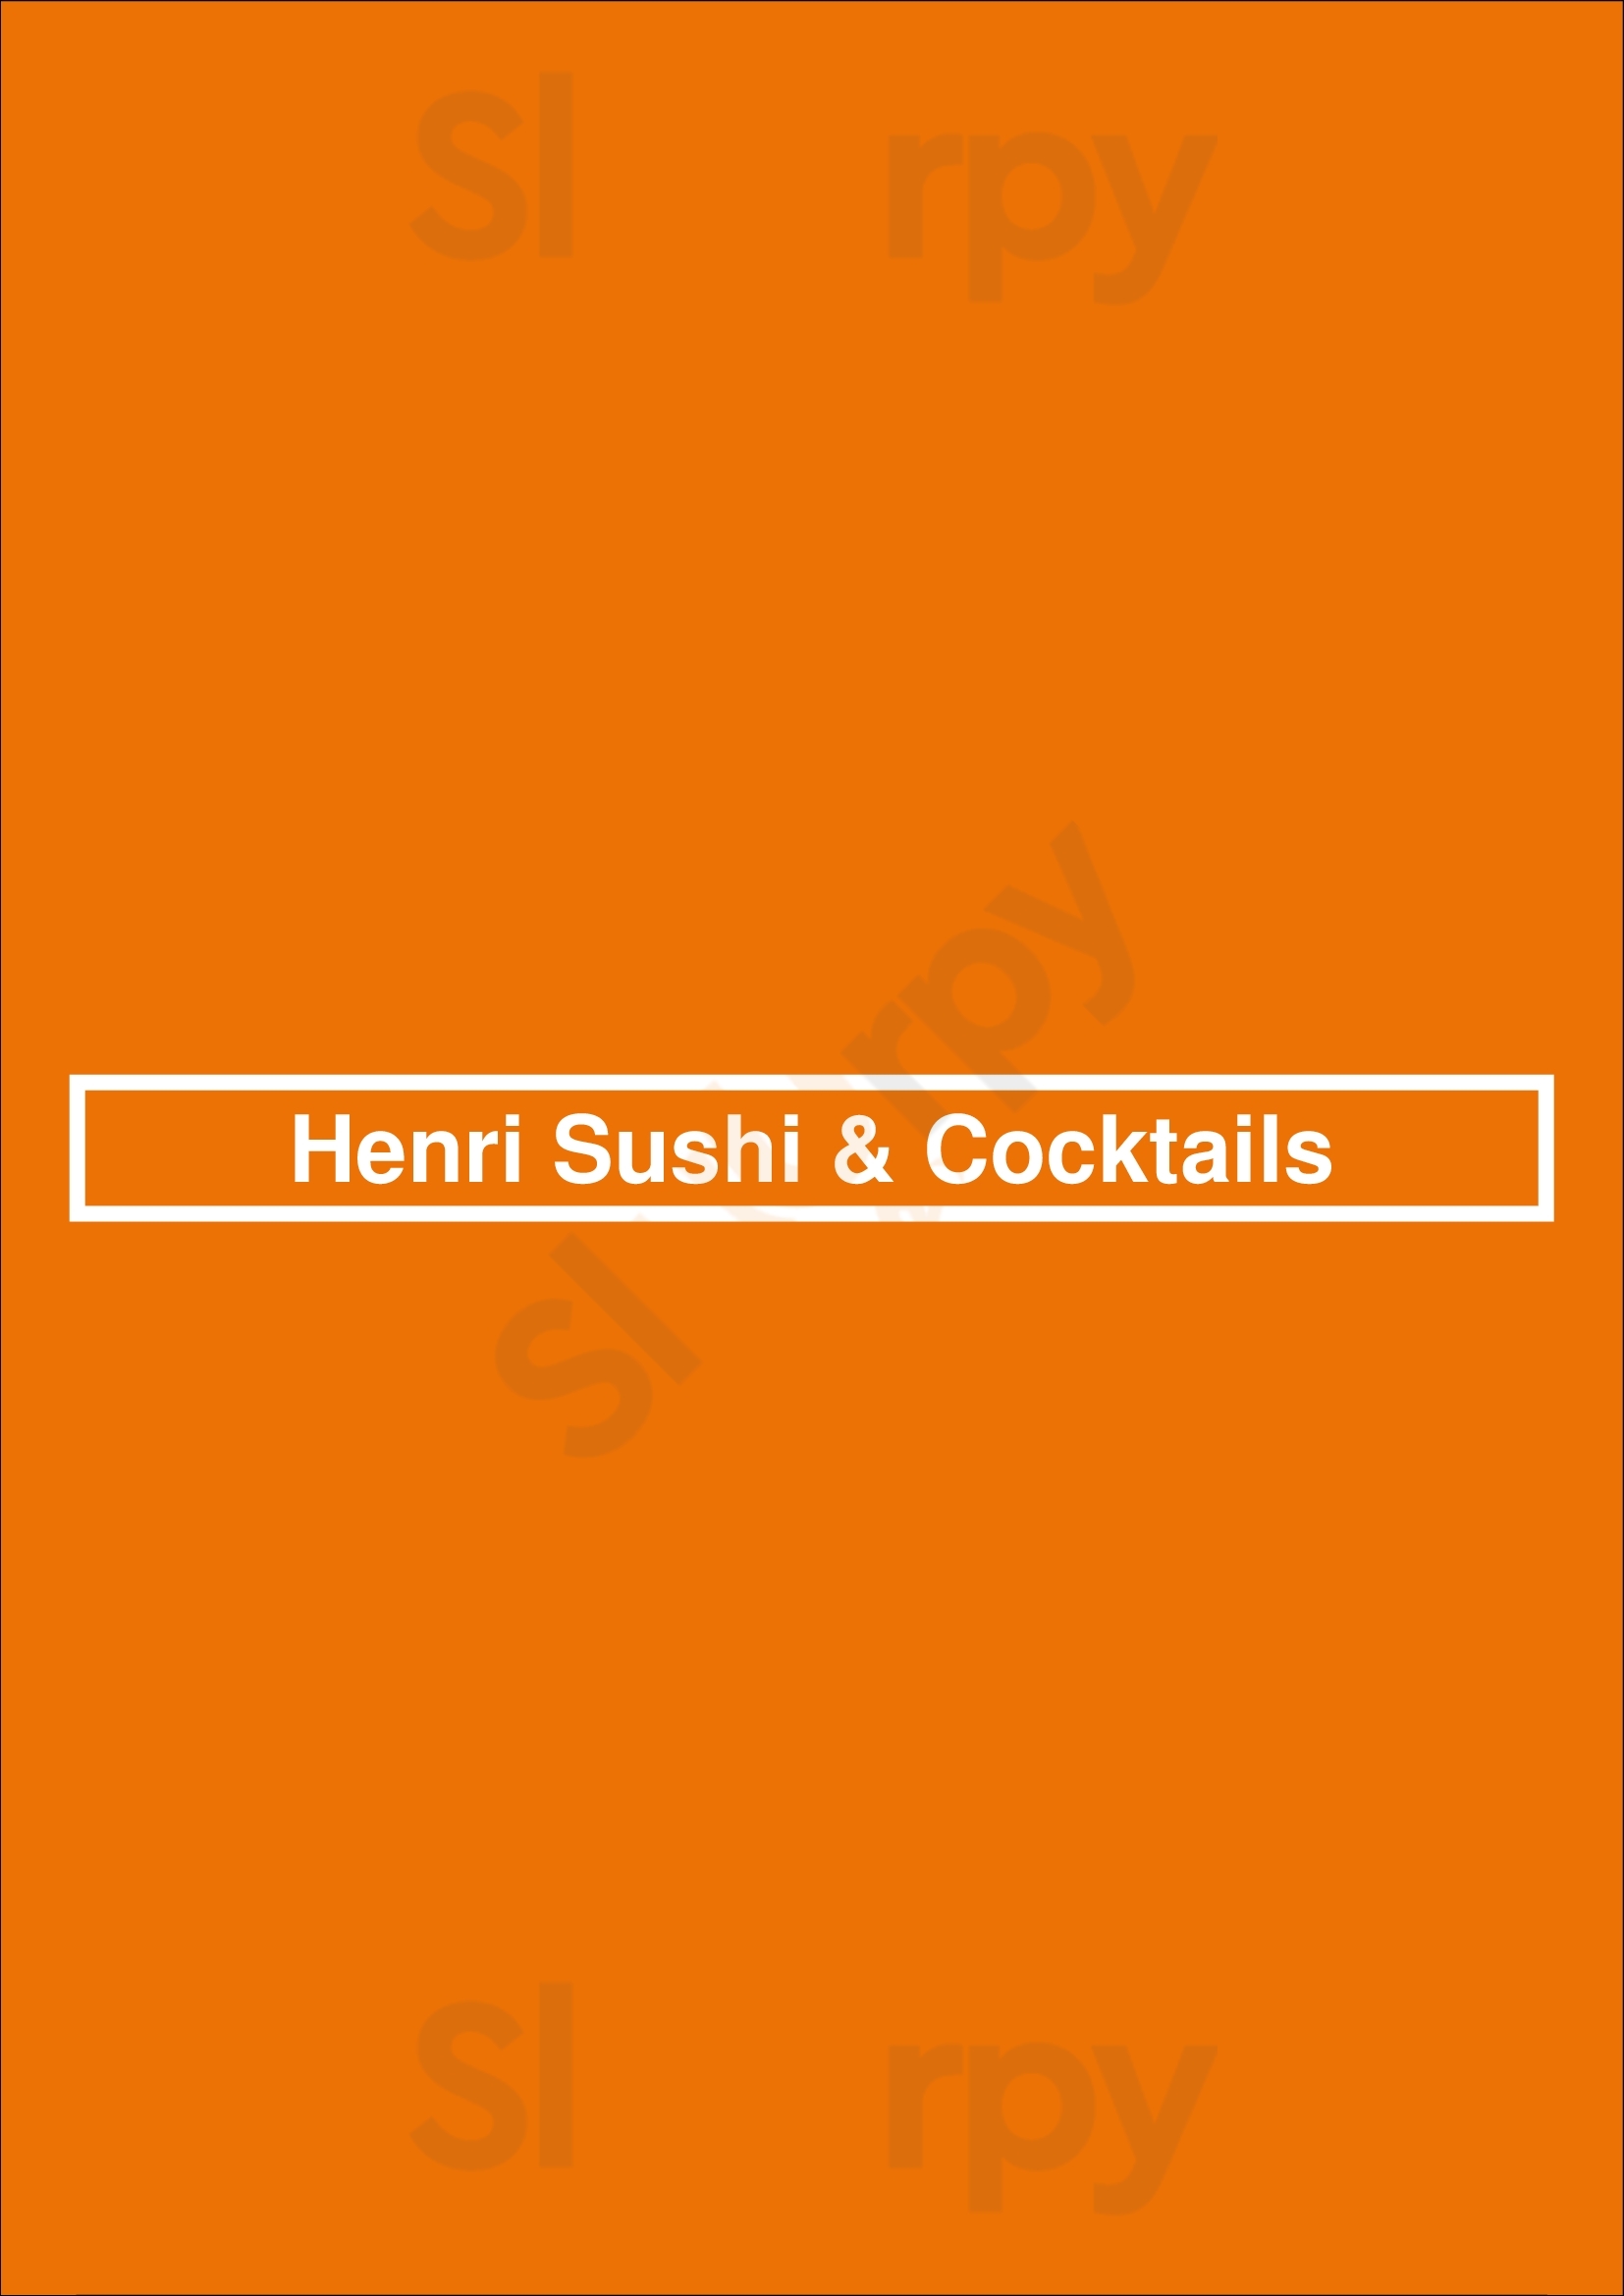 Henri Sushi & Cocktails Buenos Aires Menu - 1